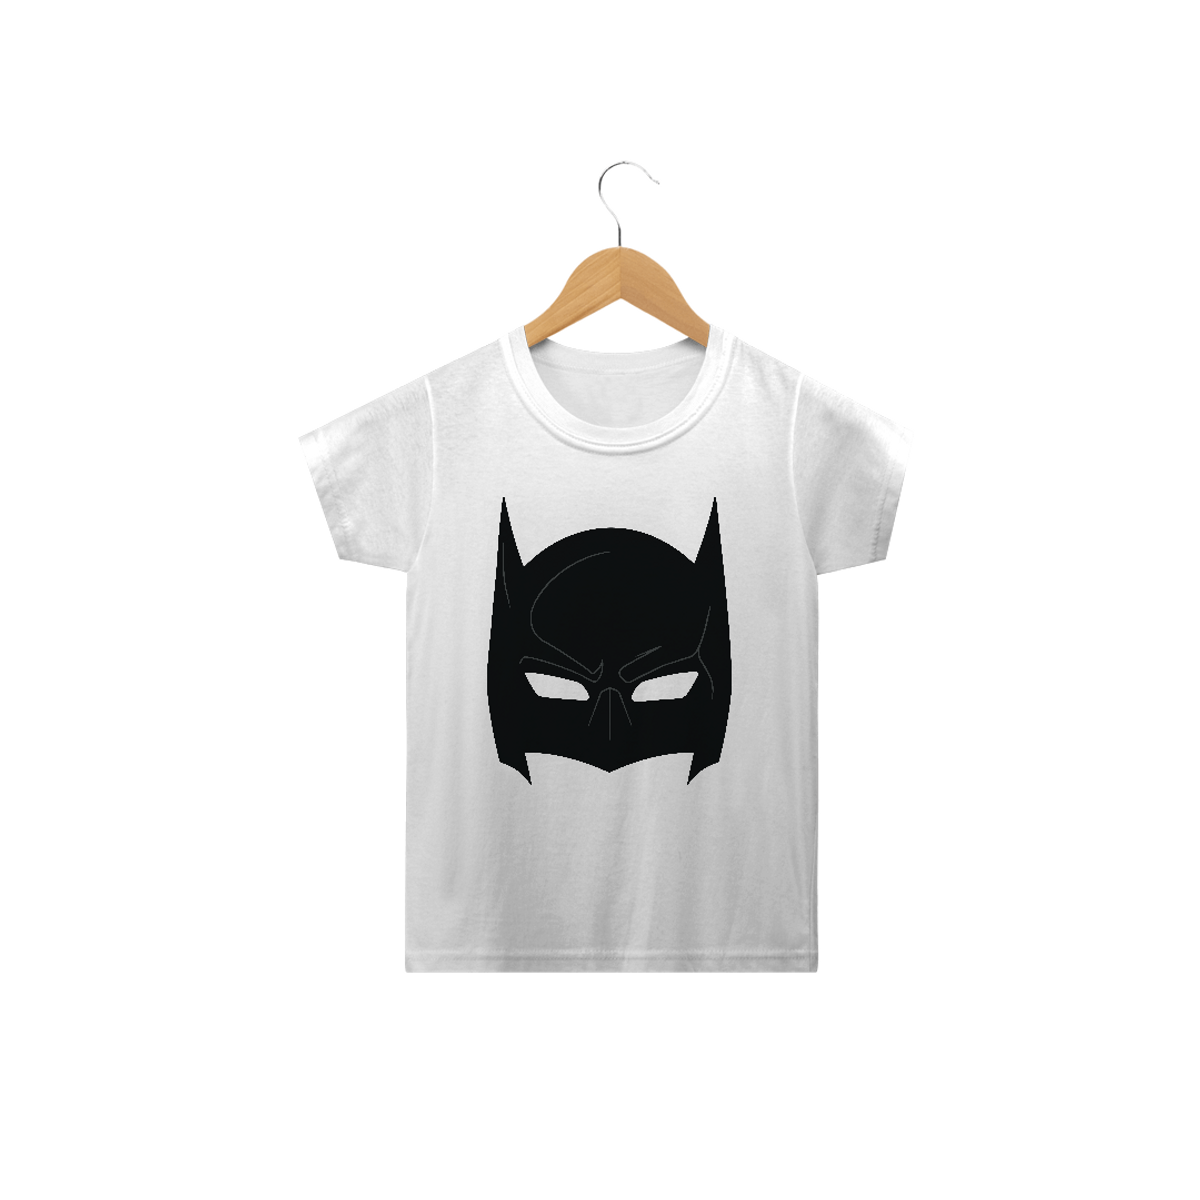 Nome do produto: Camiseta Infantil Mascara Batman